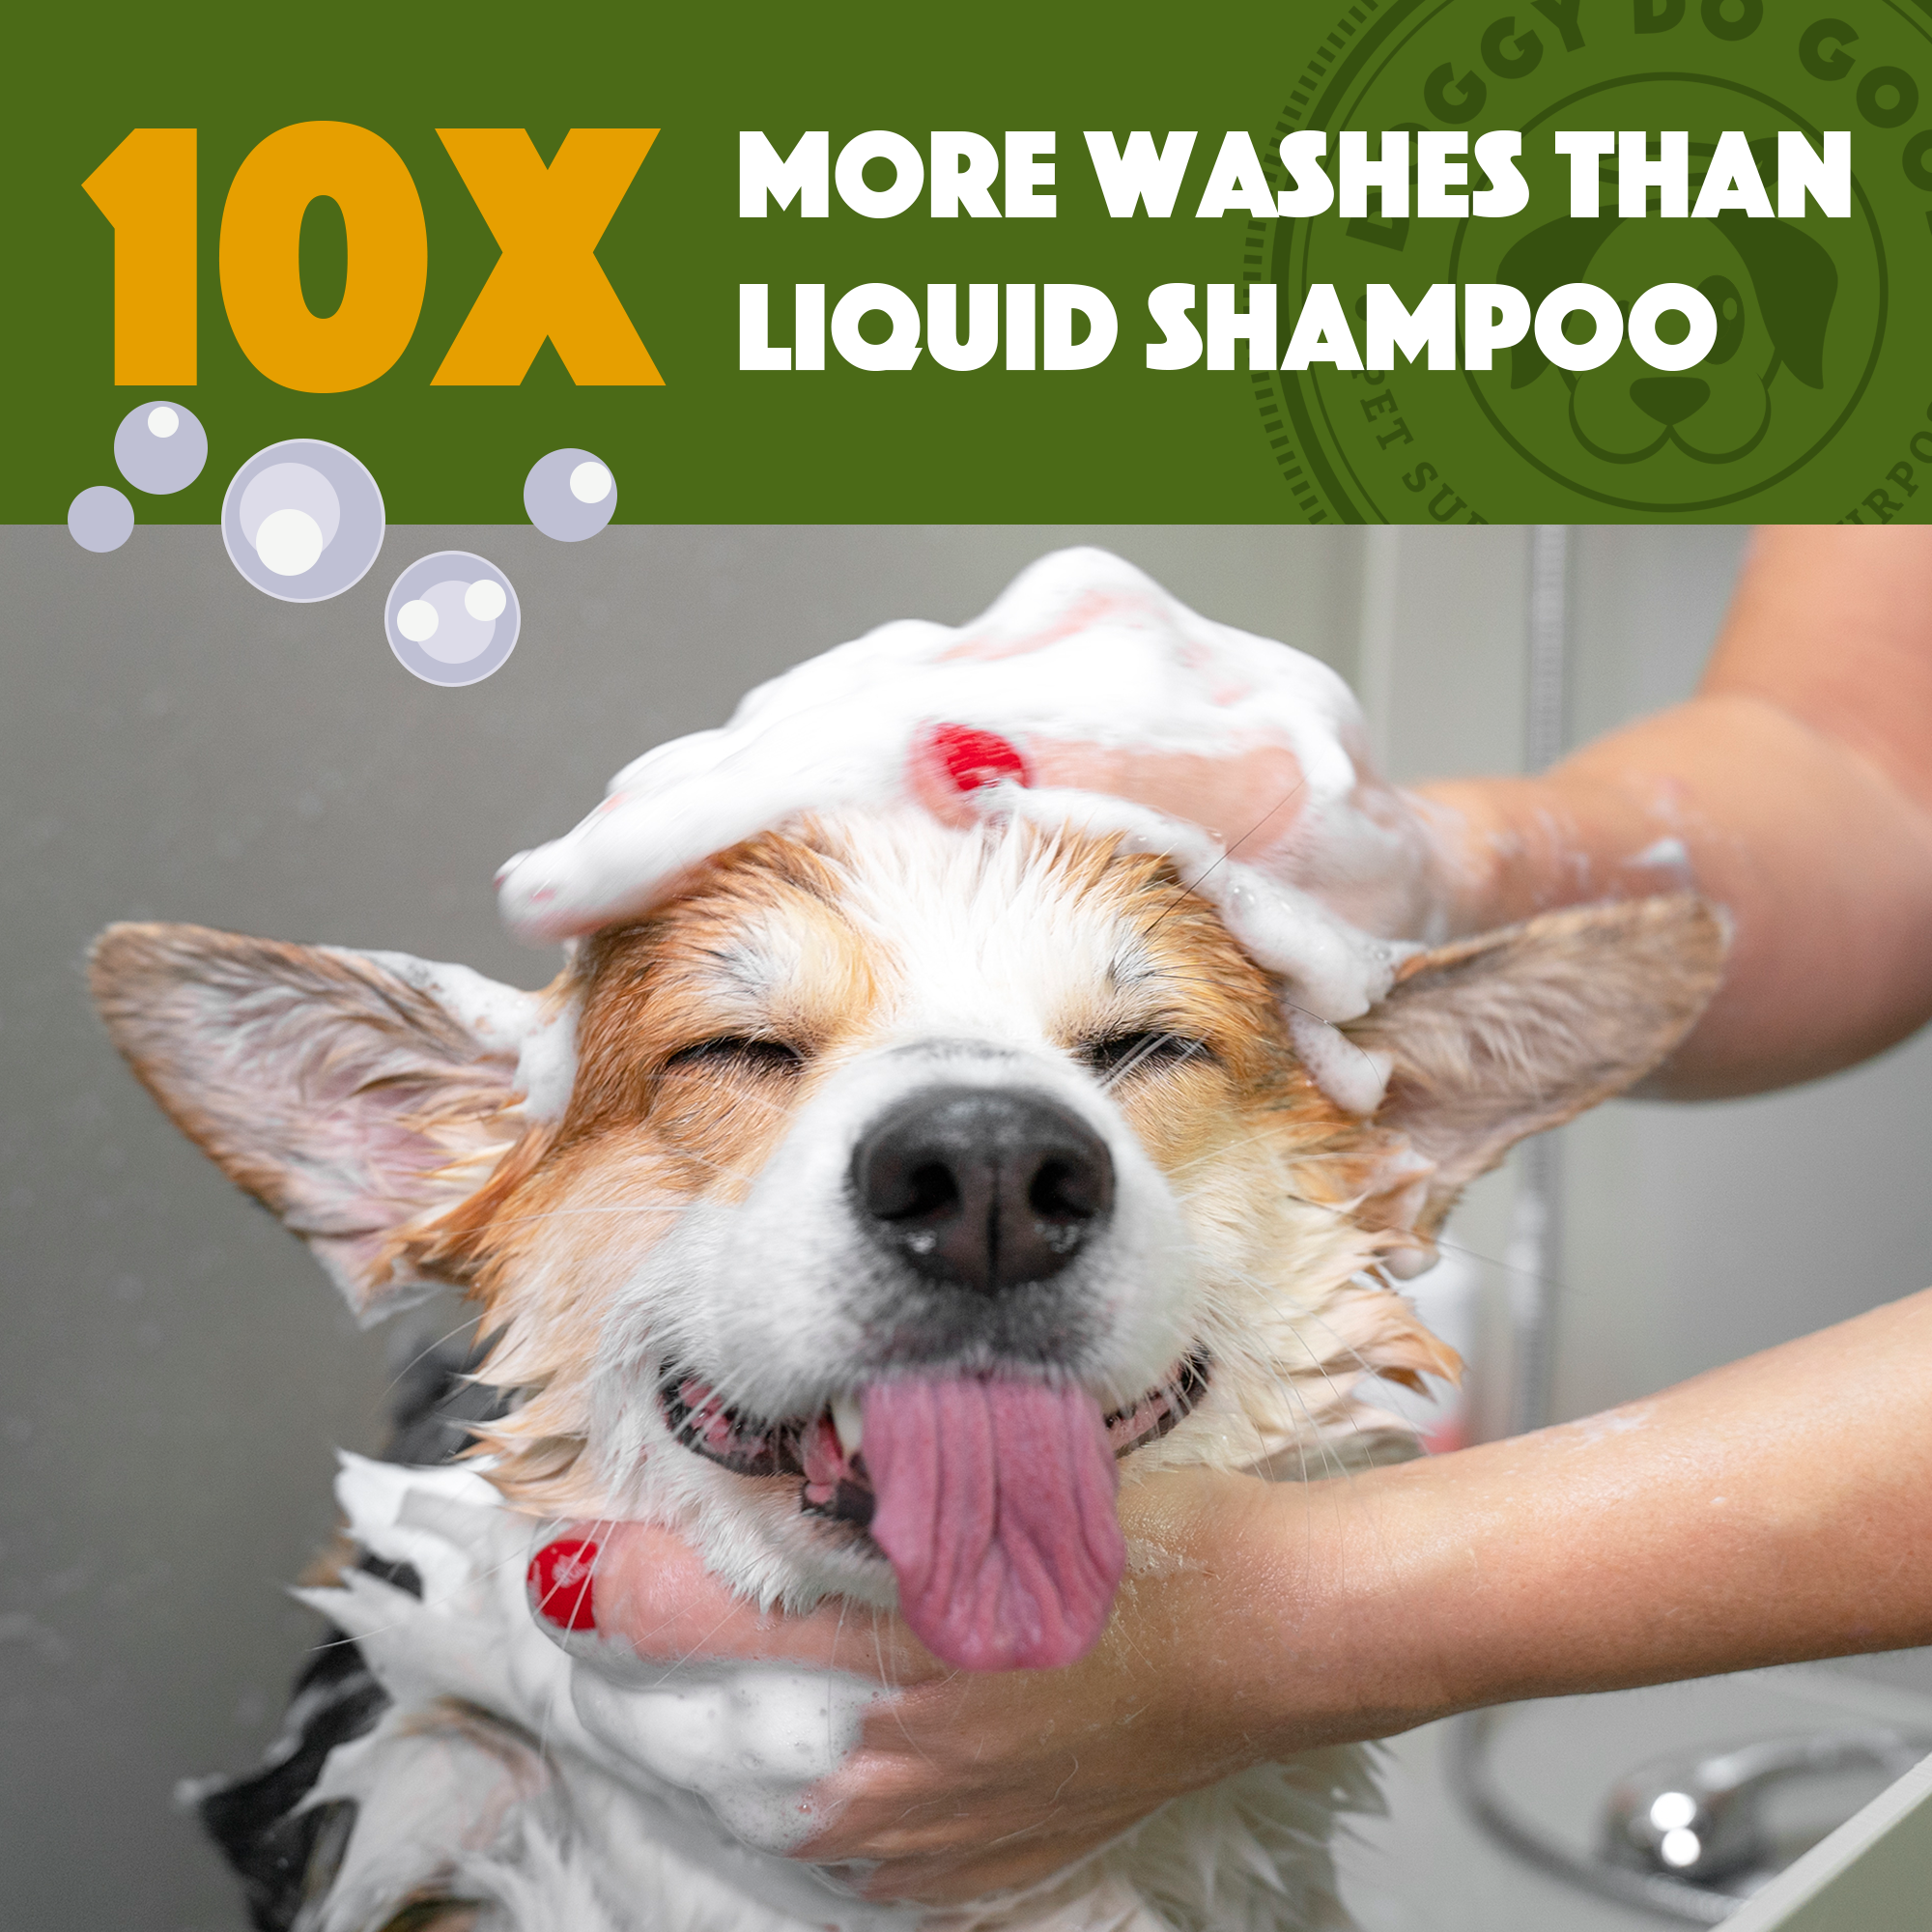 Dog Shampoo Bar - Sensitive Formula